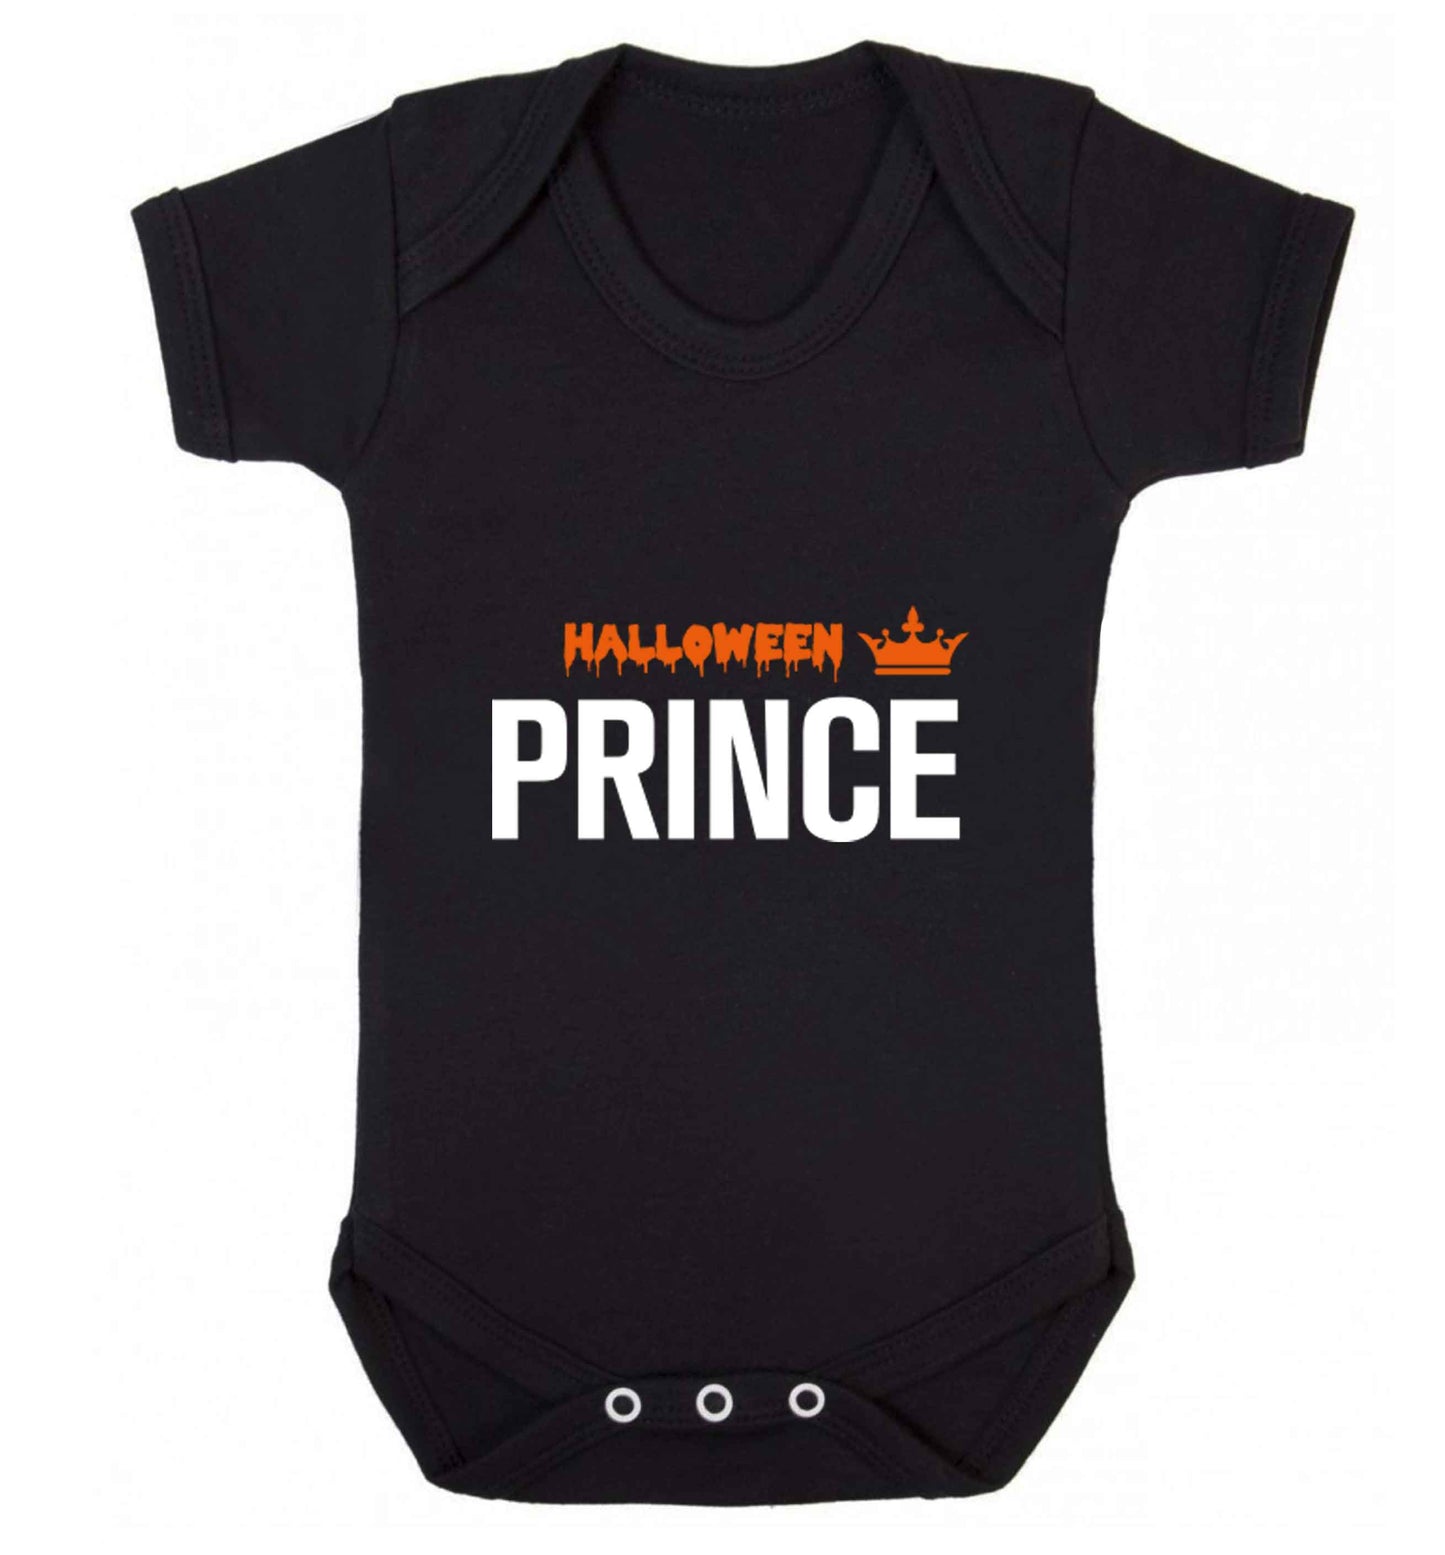 Halloween prince baby vest black 18-24 months